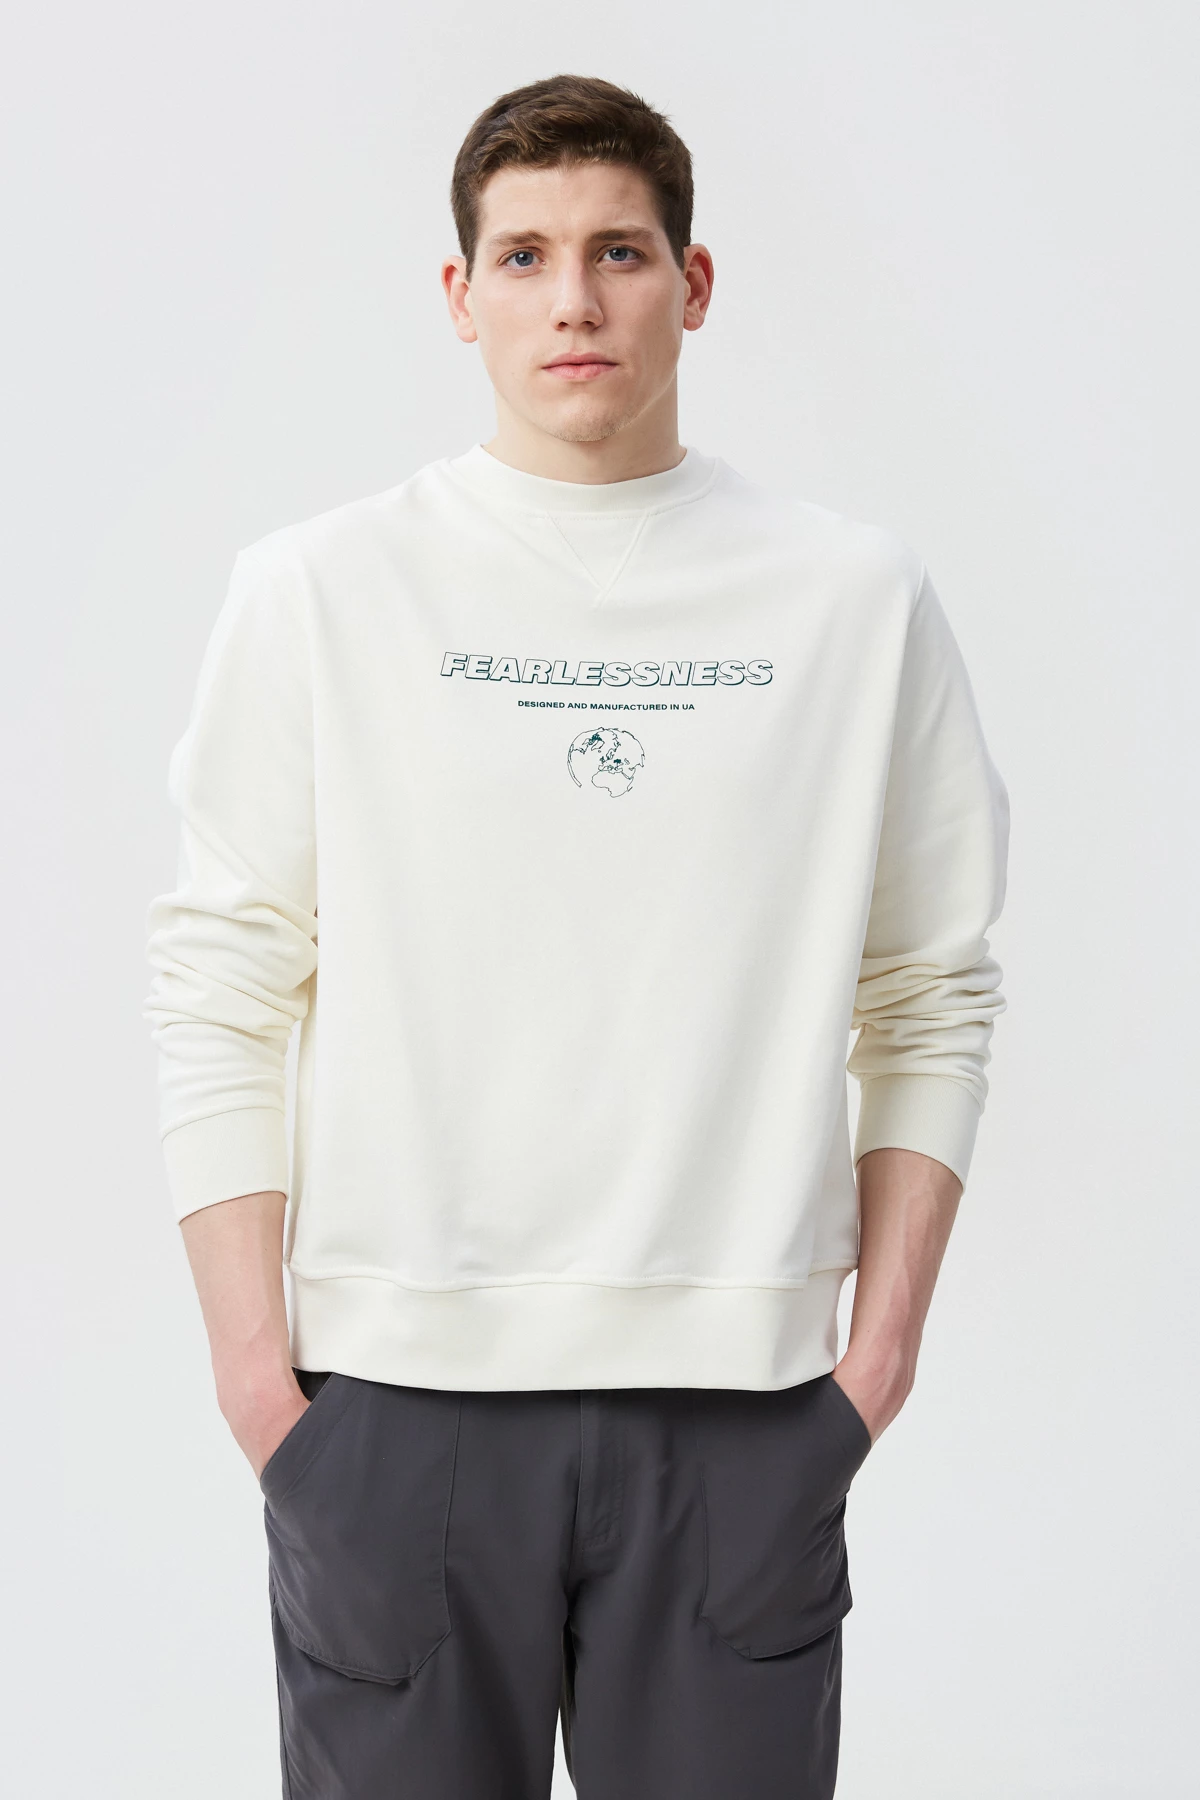 Milky unisex sweatshirt with "Fearlessness" print, photo 6